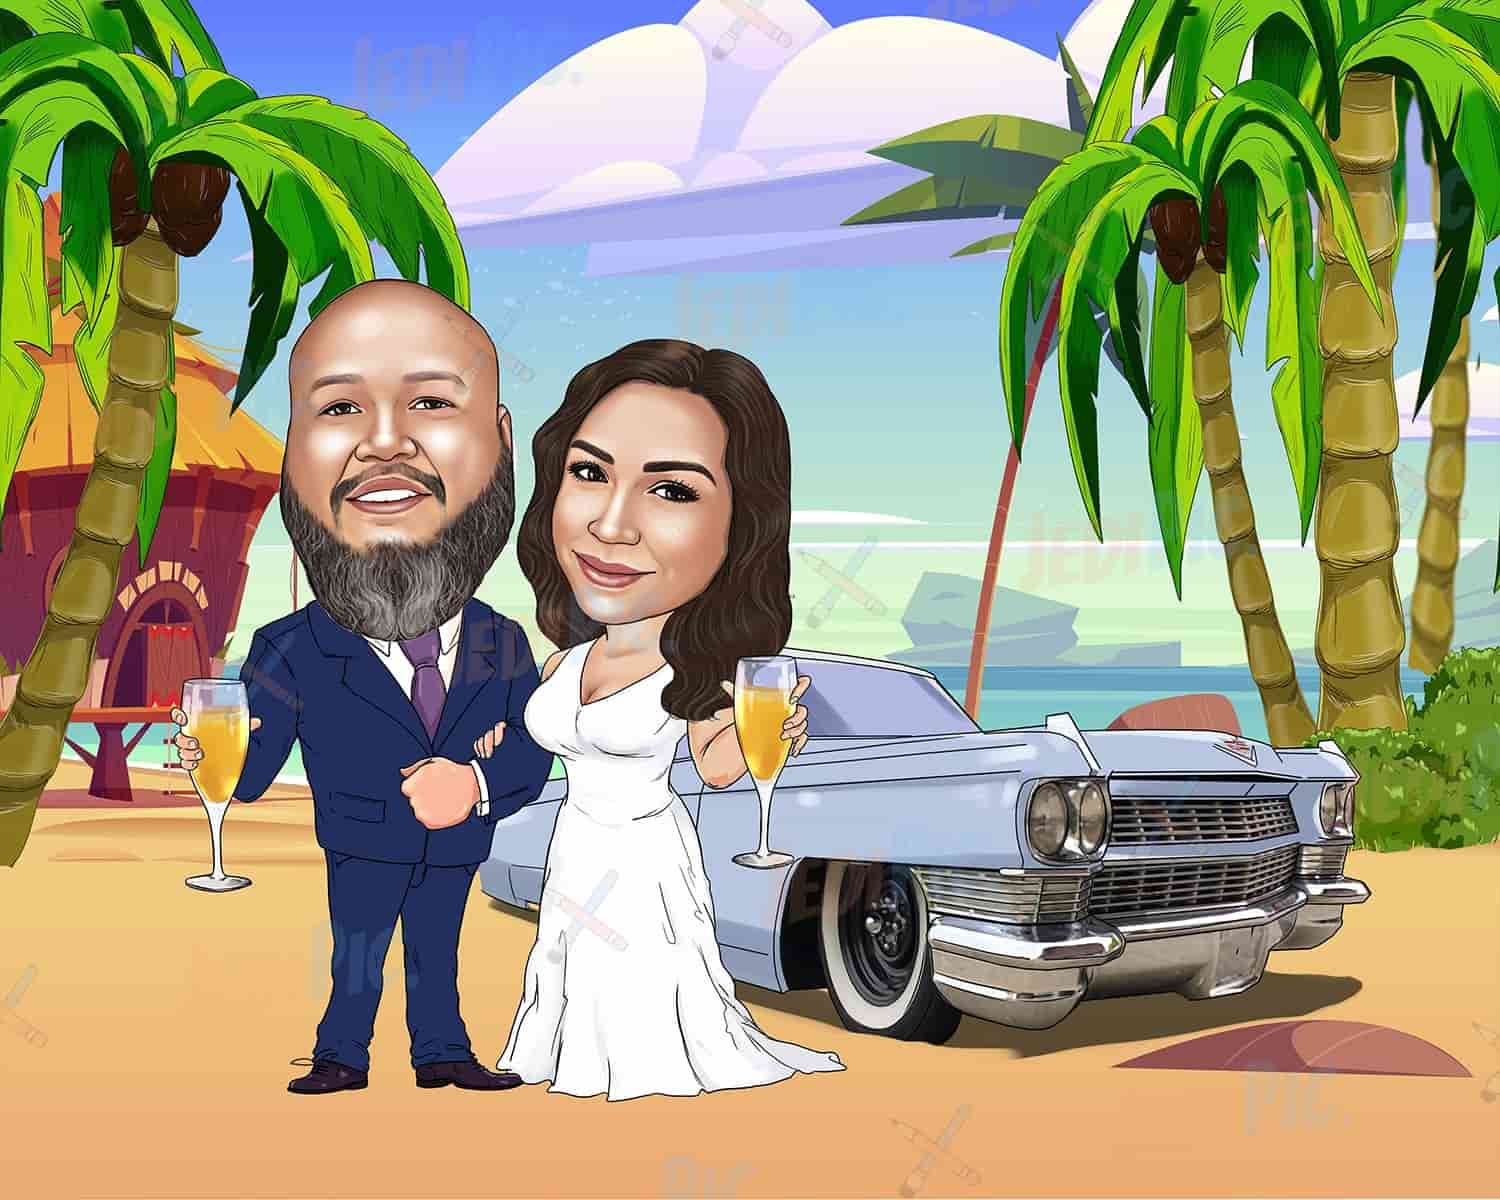 Cartoon from Photo: Wedding Couple